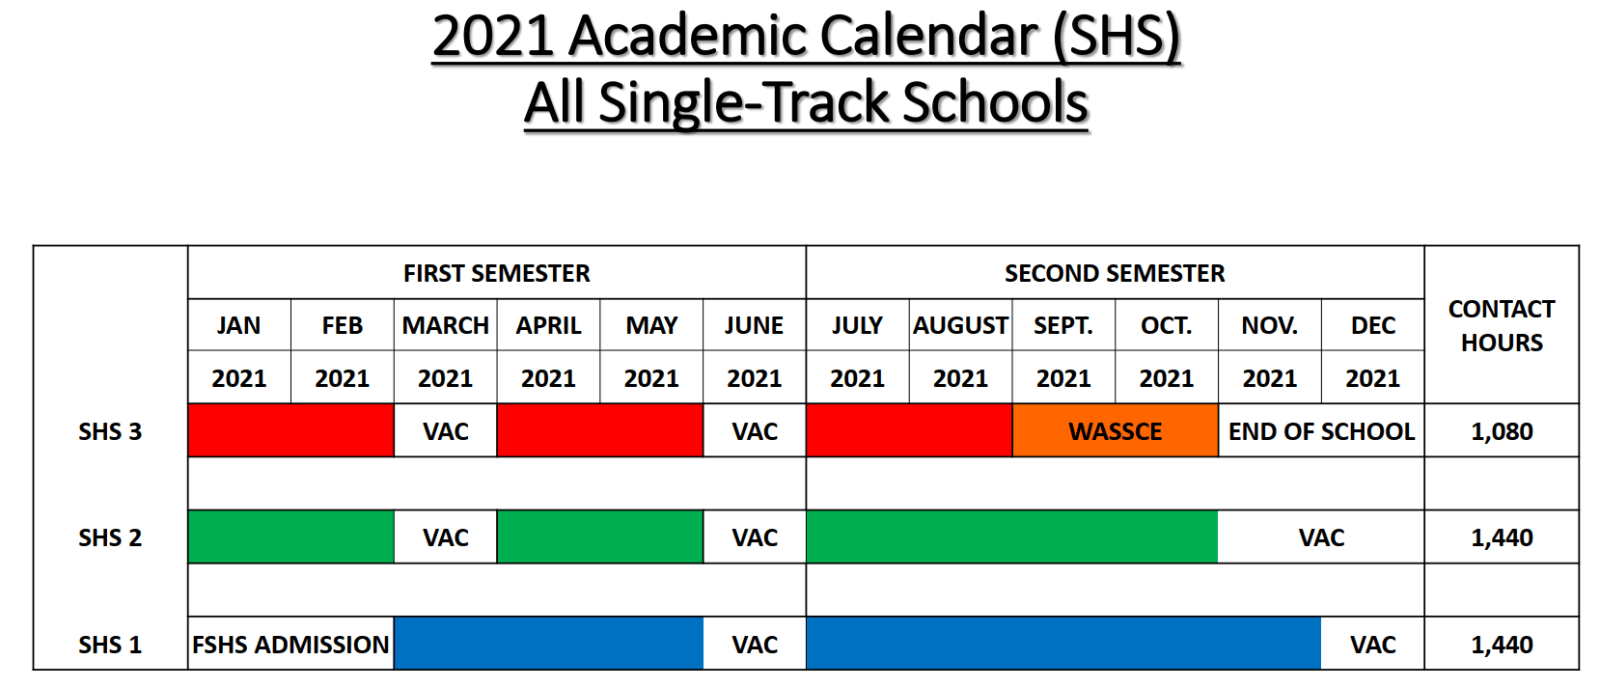 2021 Academic Calendar (SHS) All Single-Track Schools